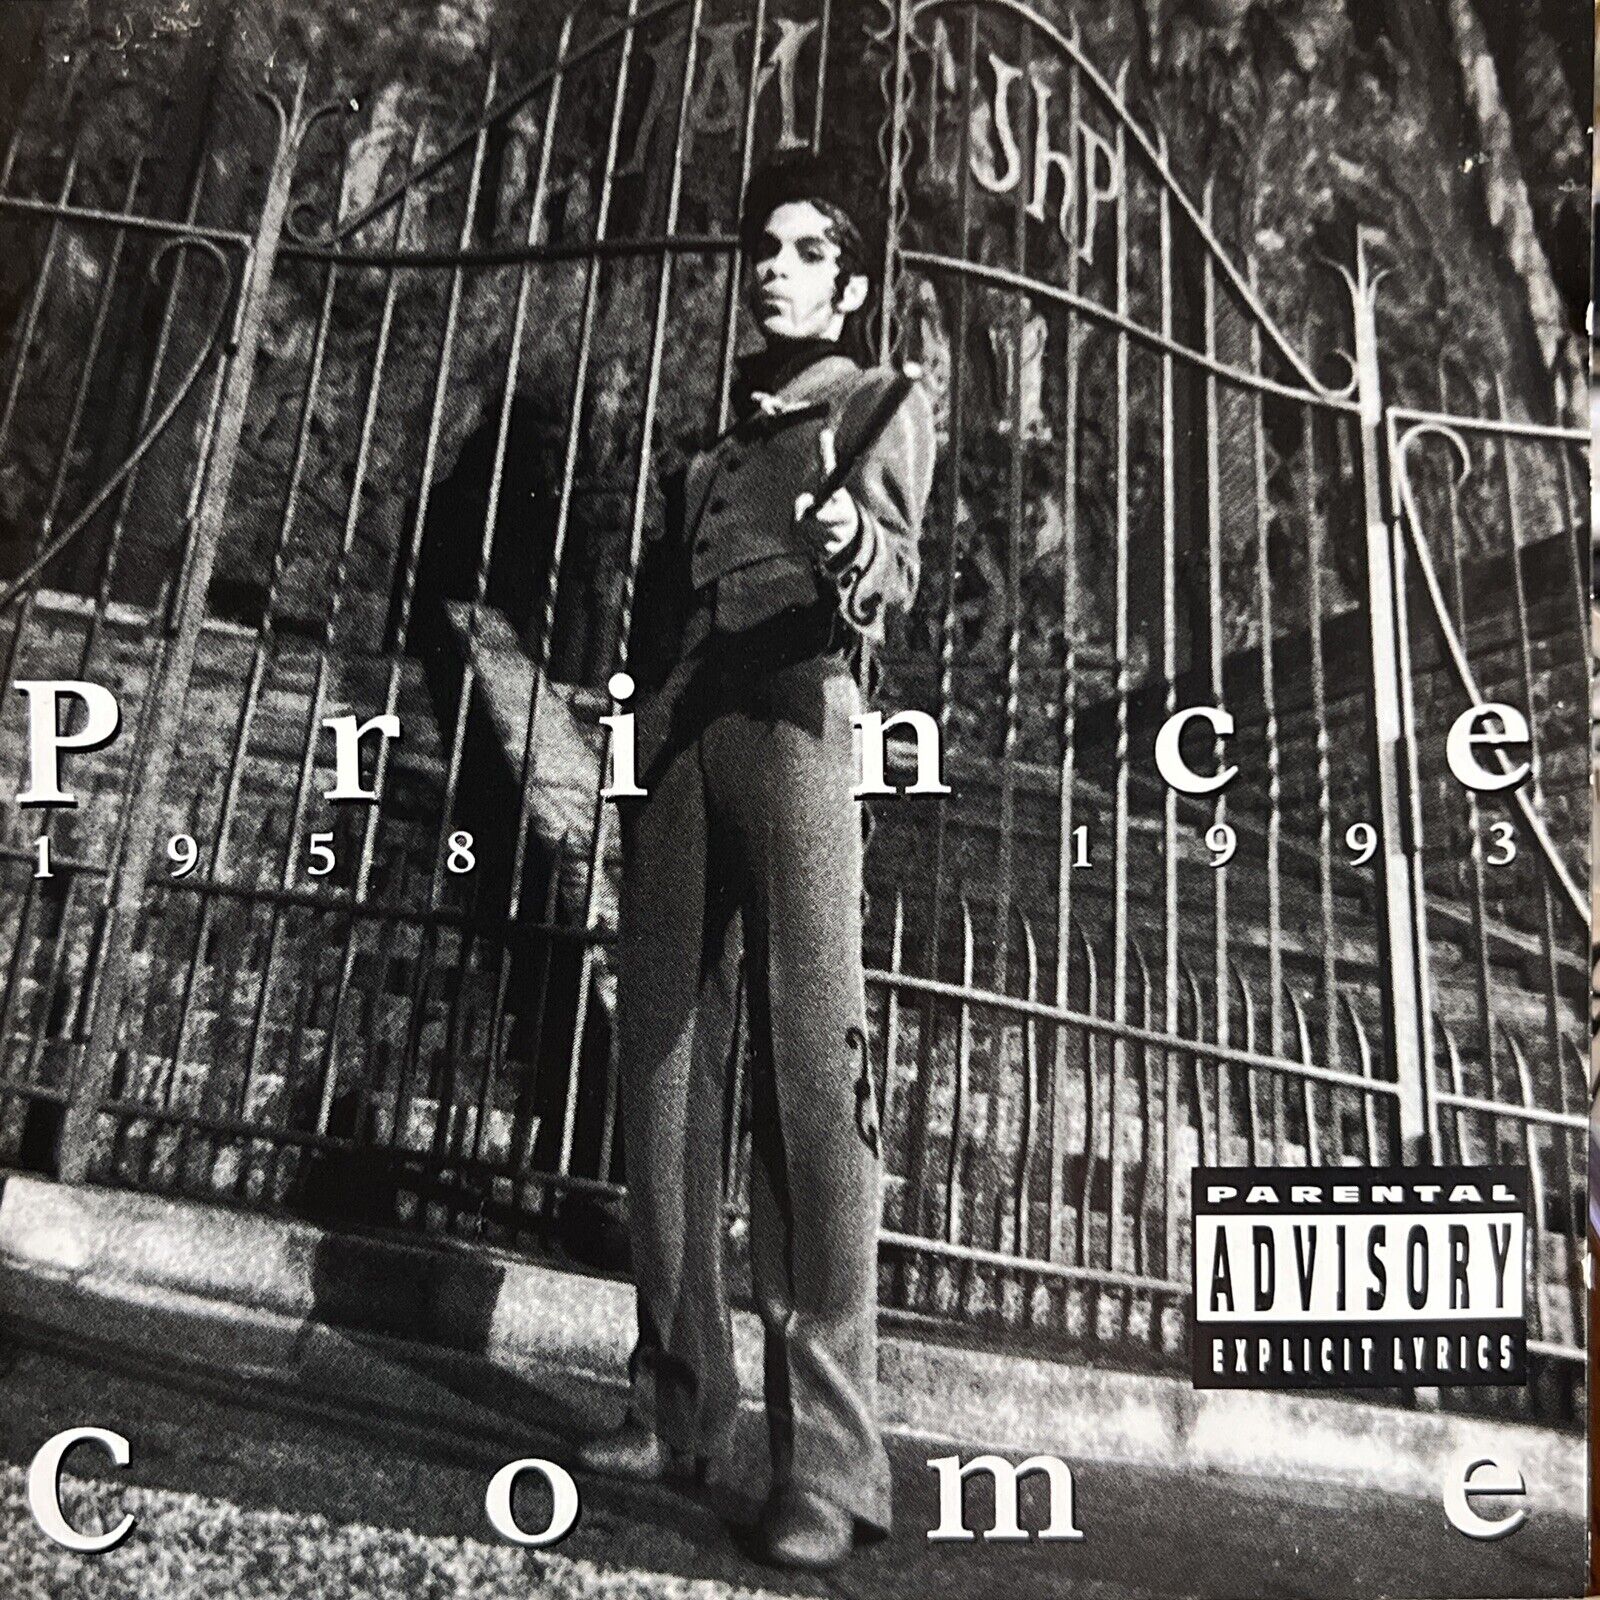 Come CD Prince 1994 Warner Bros. Original Parental Advisory (PA) Version